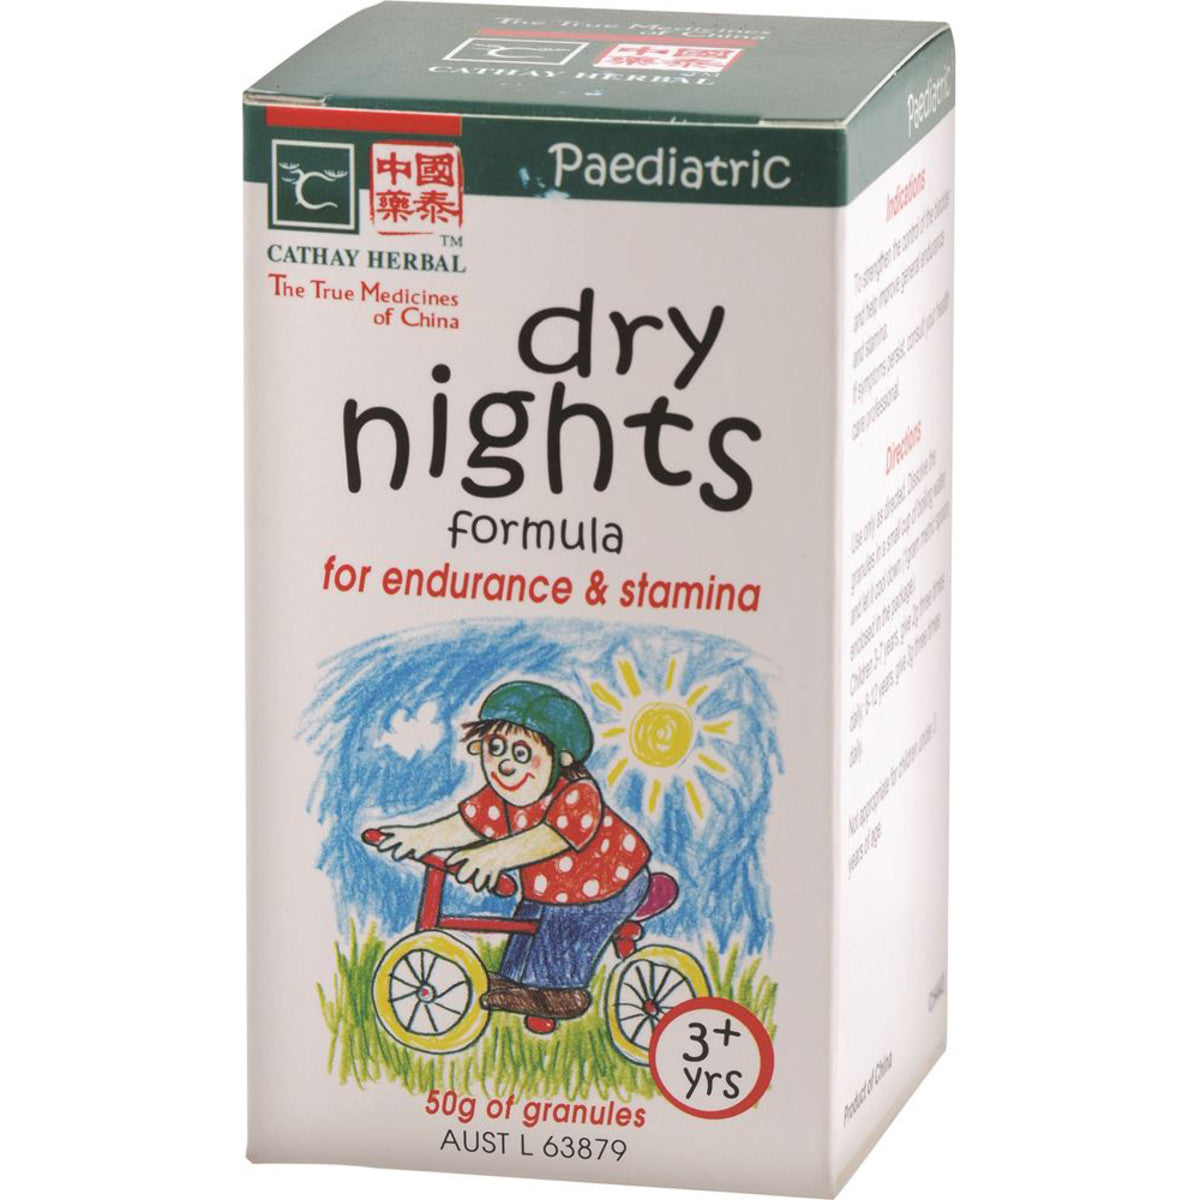 Cathay Herbal - Paediatric Dry Nights Formula